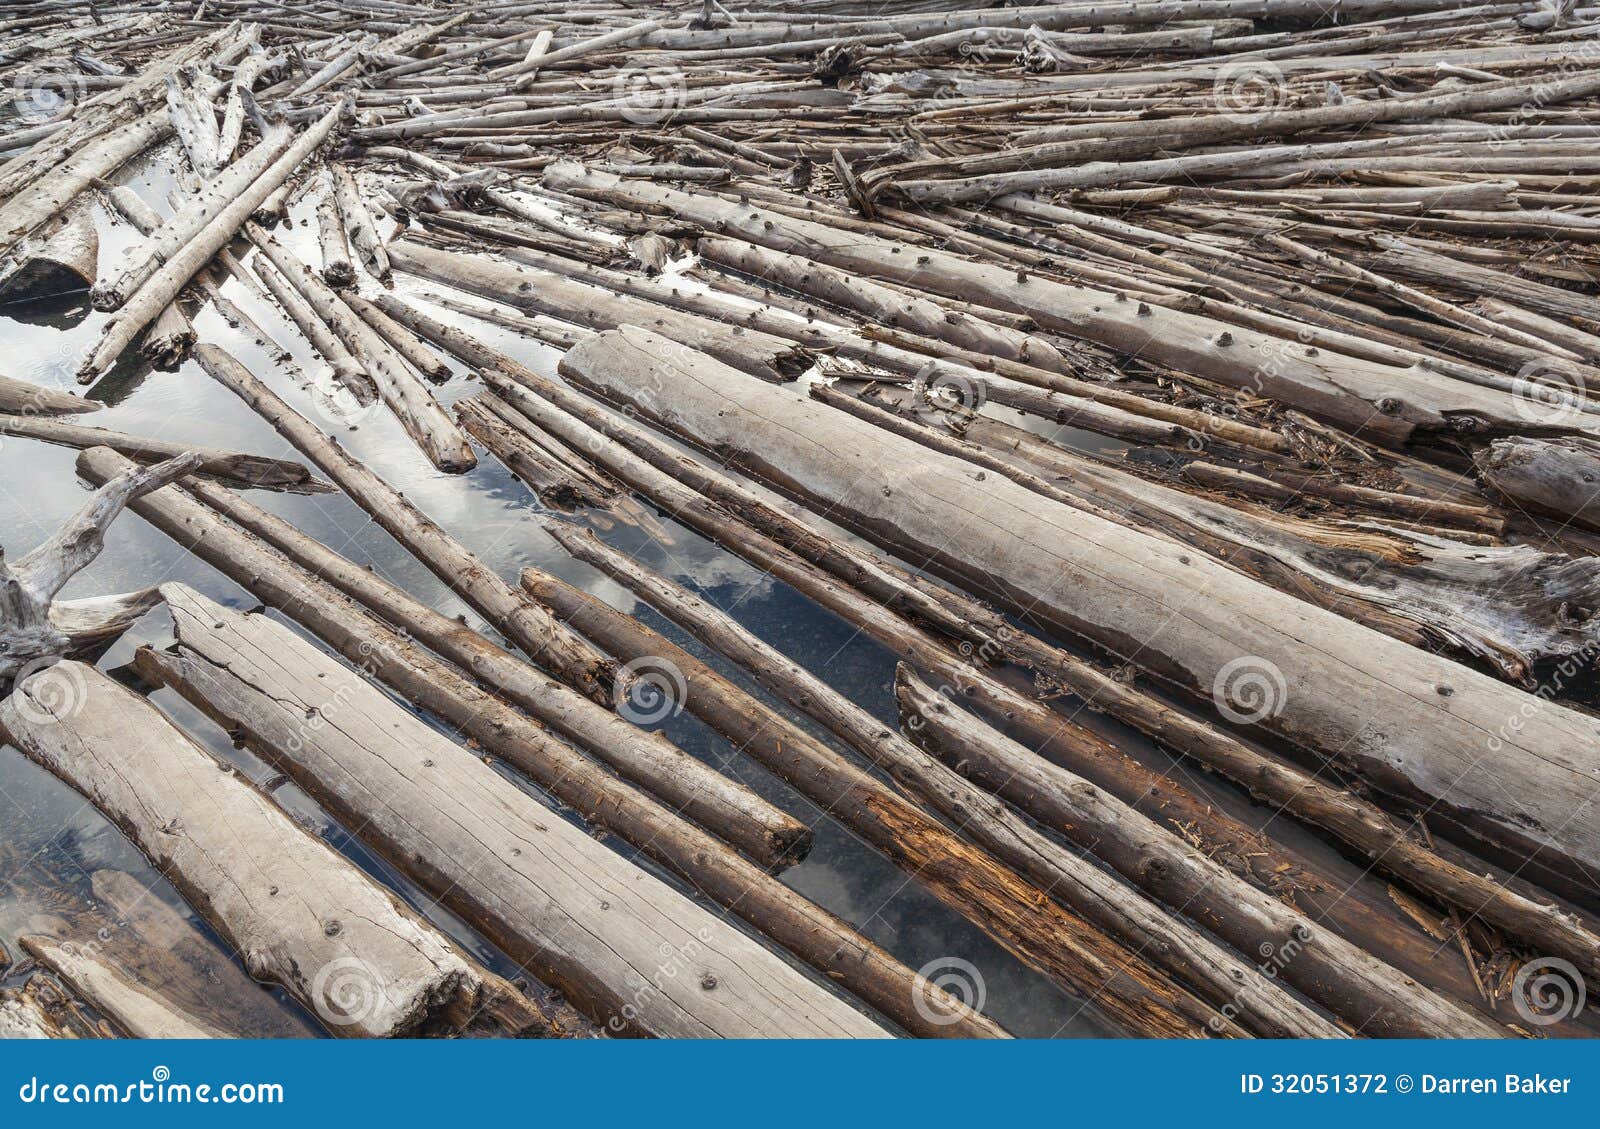 log jam of tree trunks floting on a river